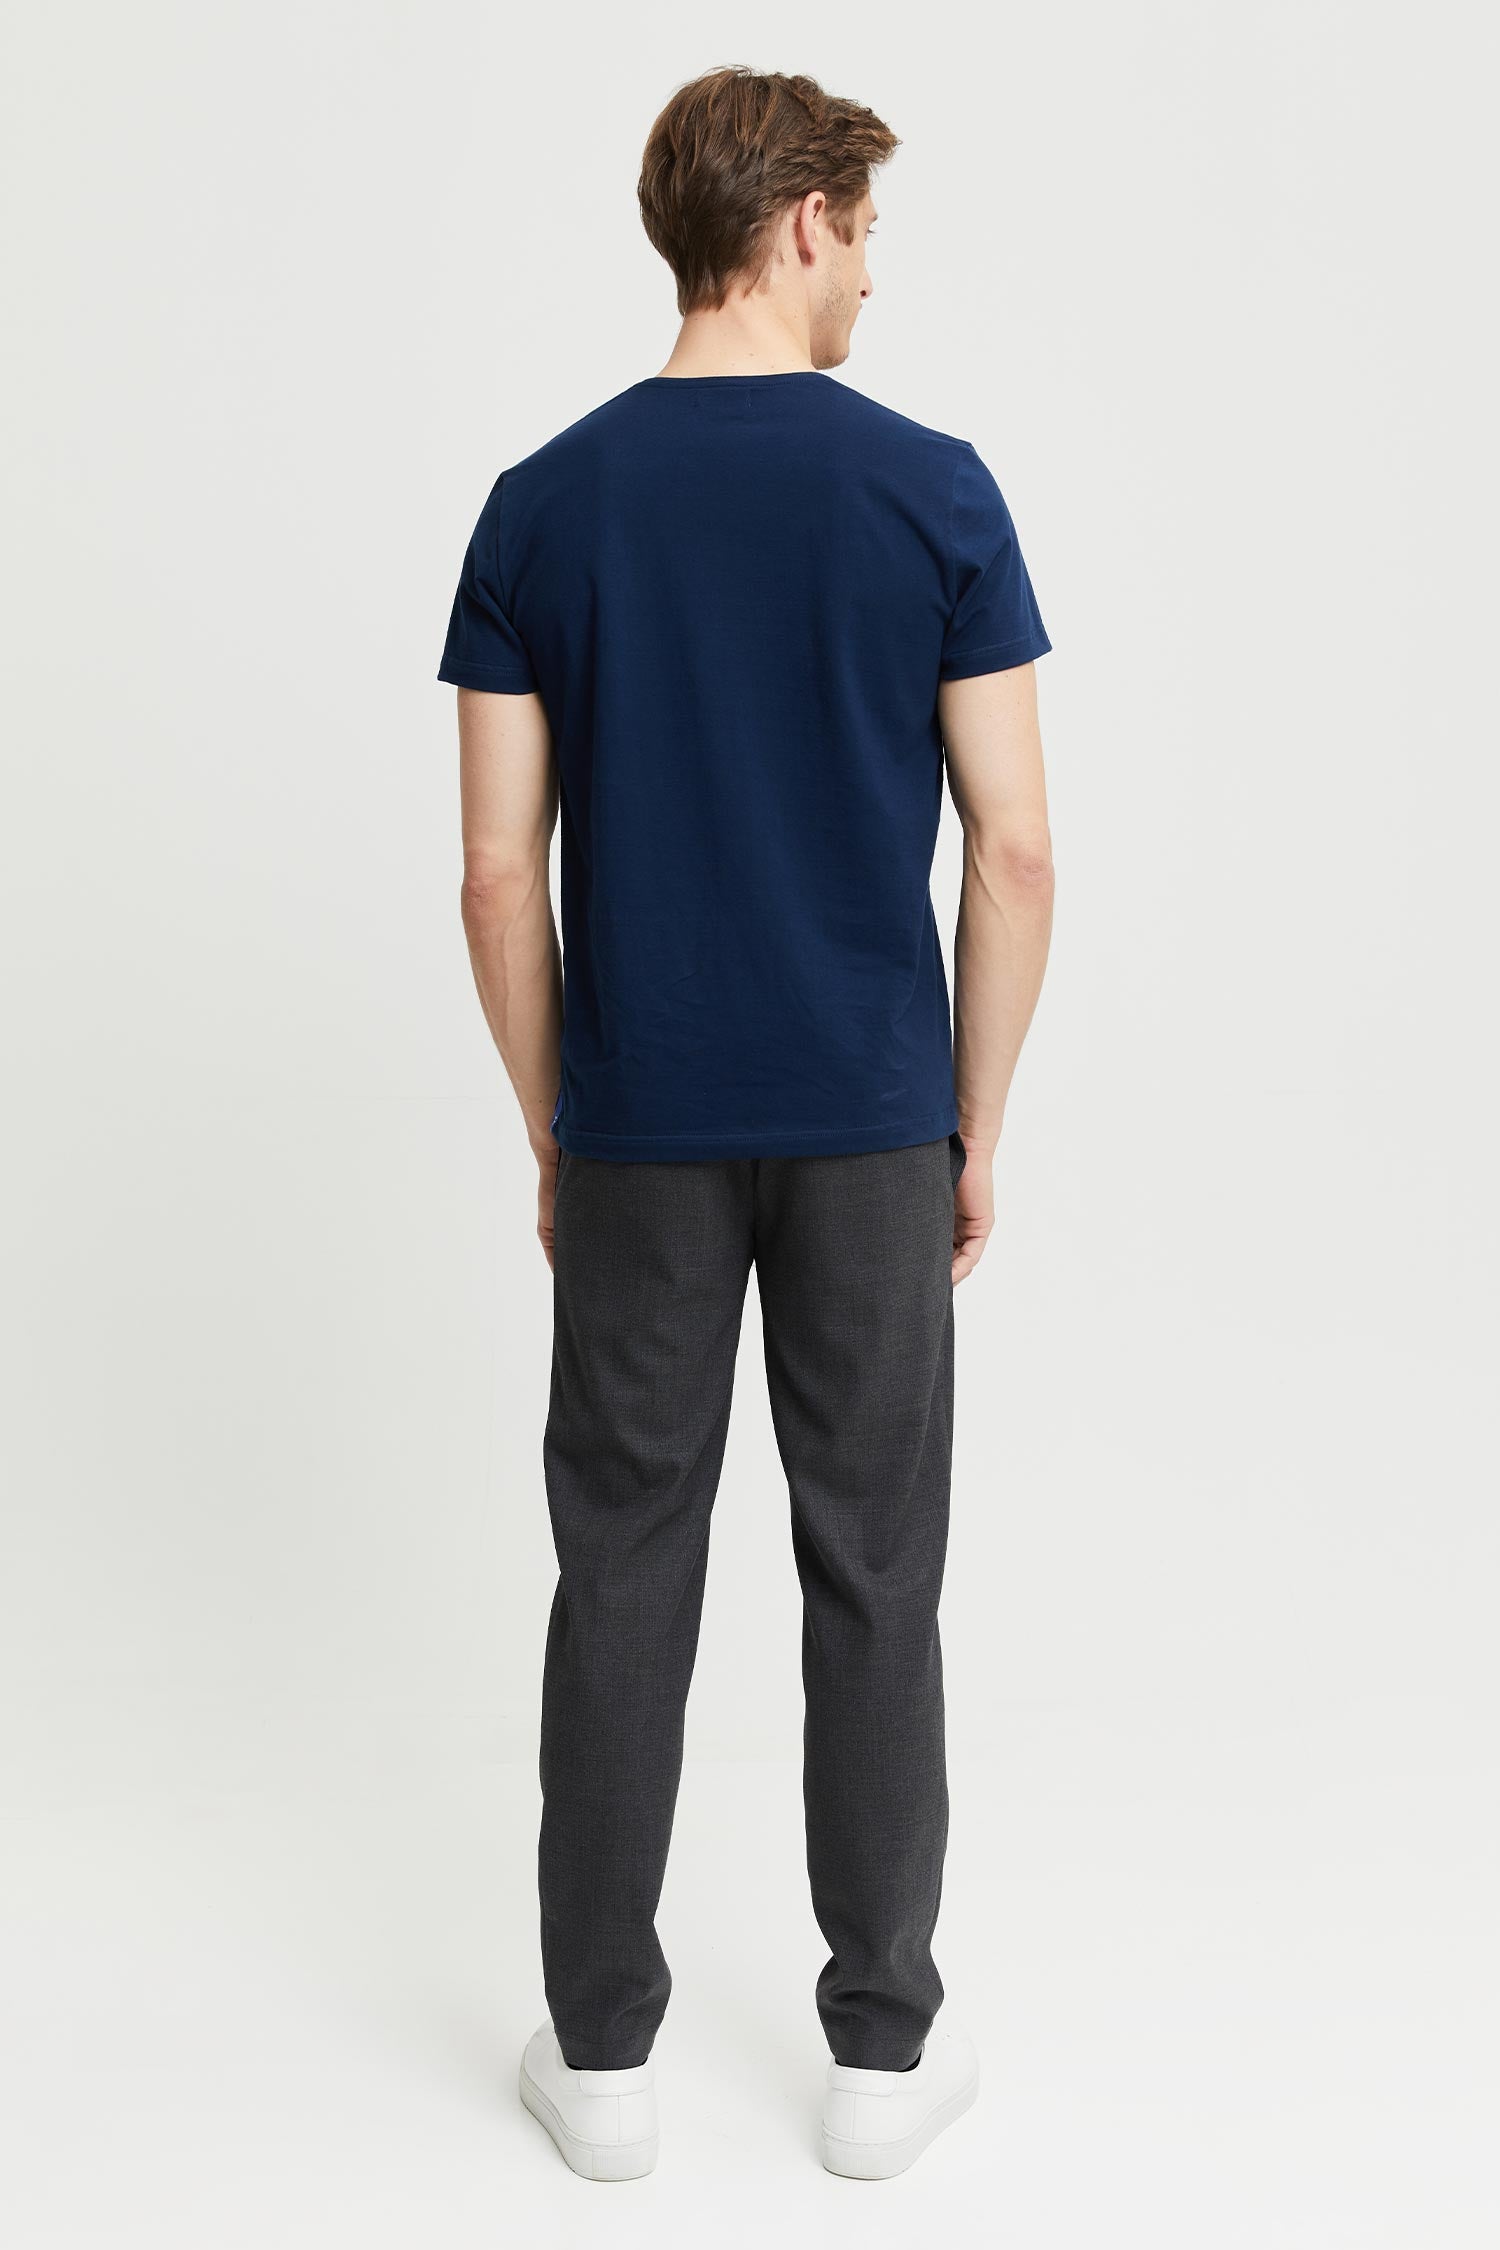 Frenn Henri sustainable premium quality GOTS organic cotton t-shirt blue